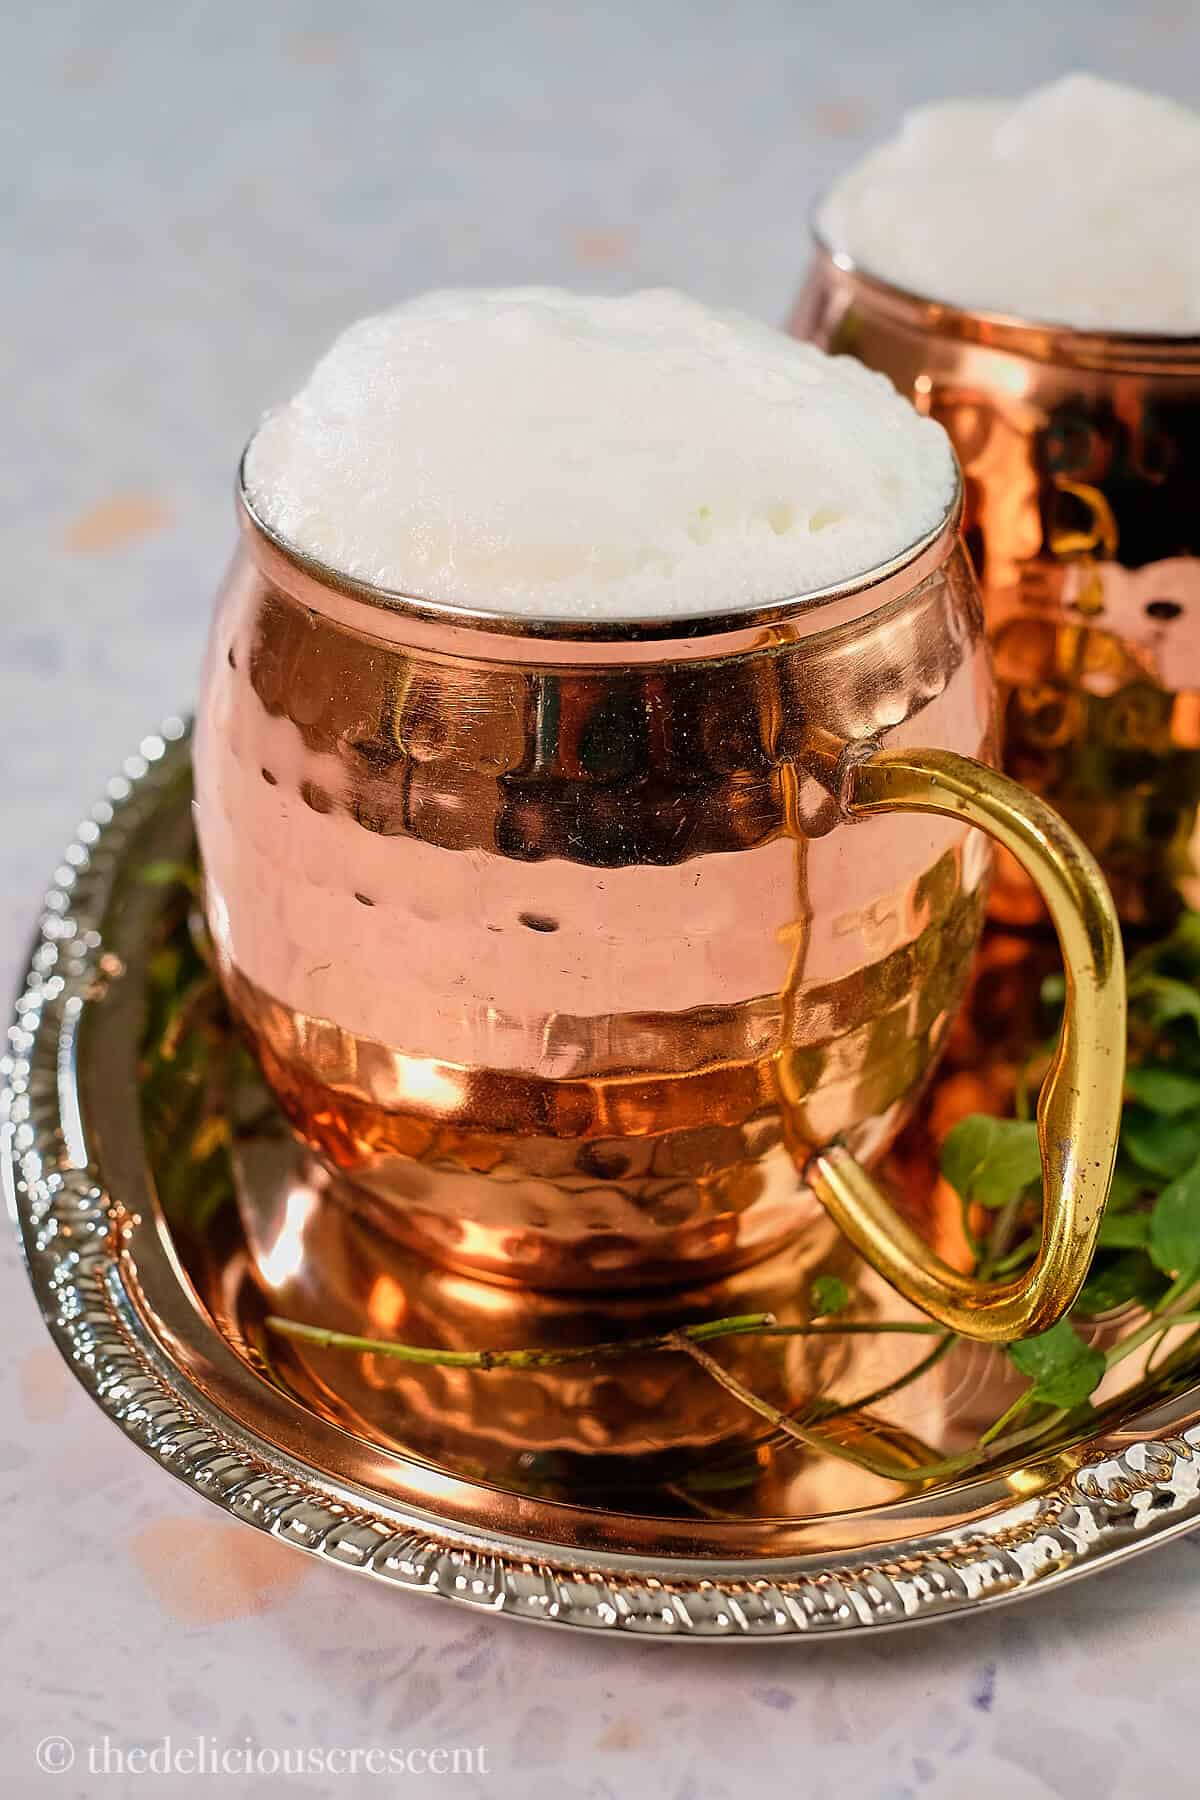 A copper mug full of Ayran with foam on top.